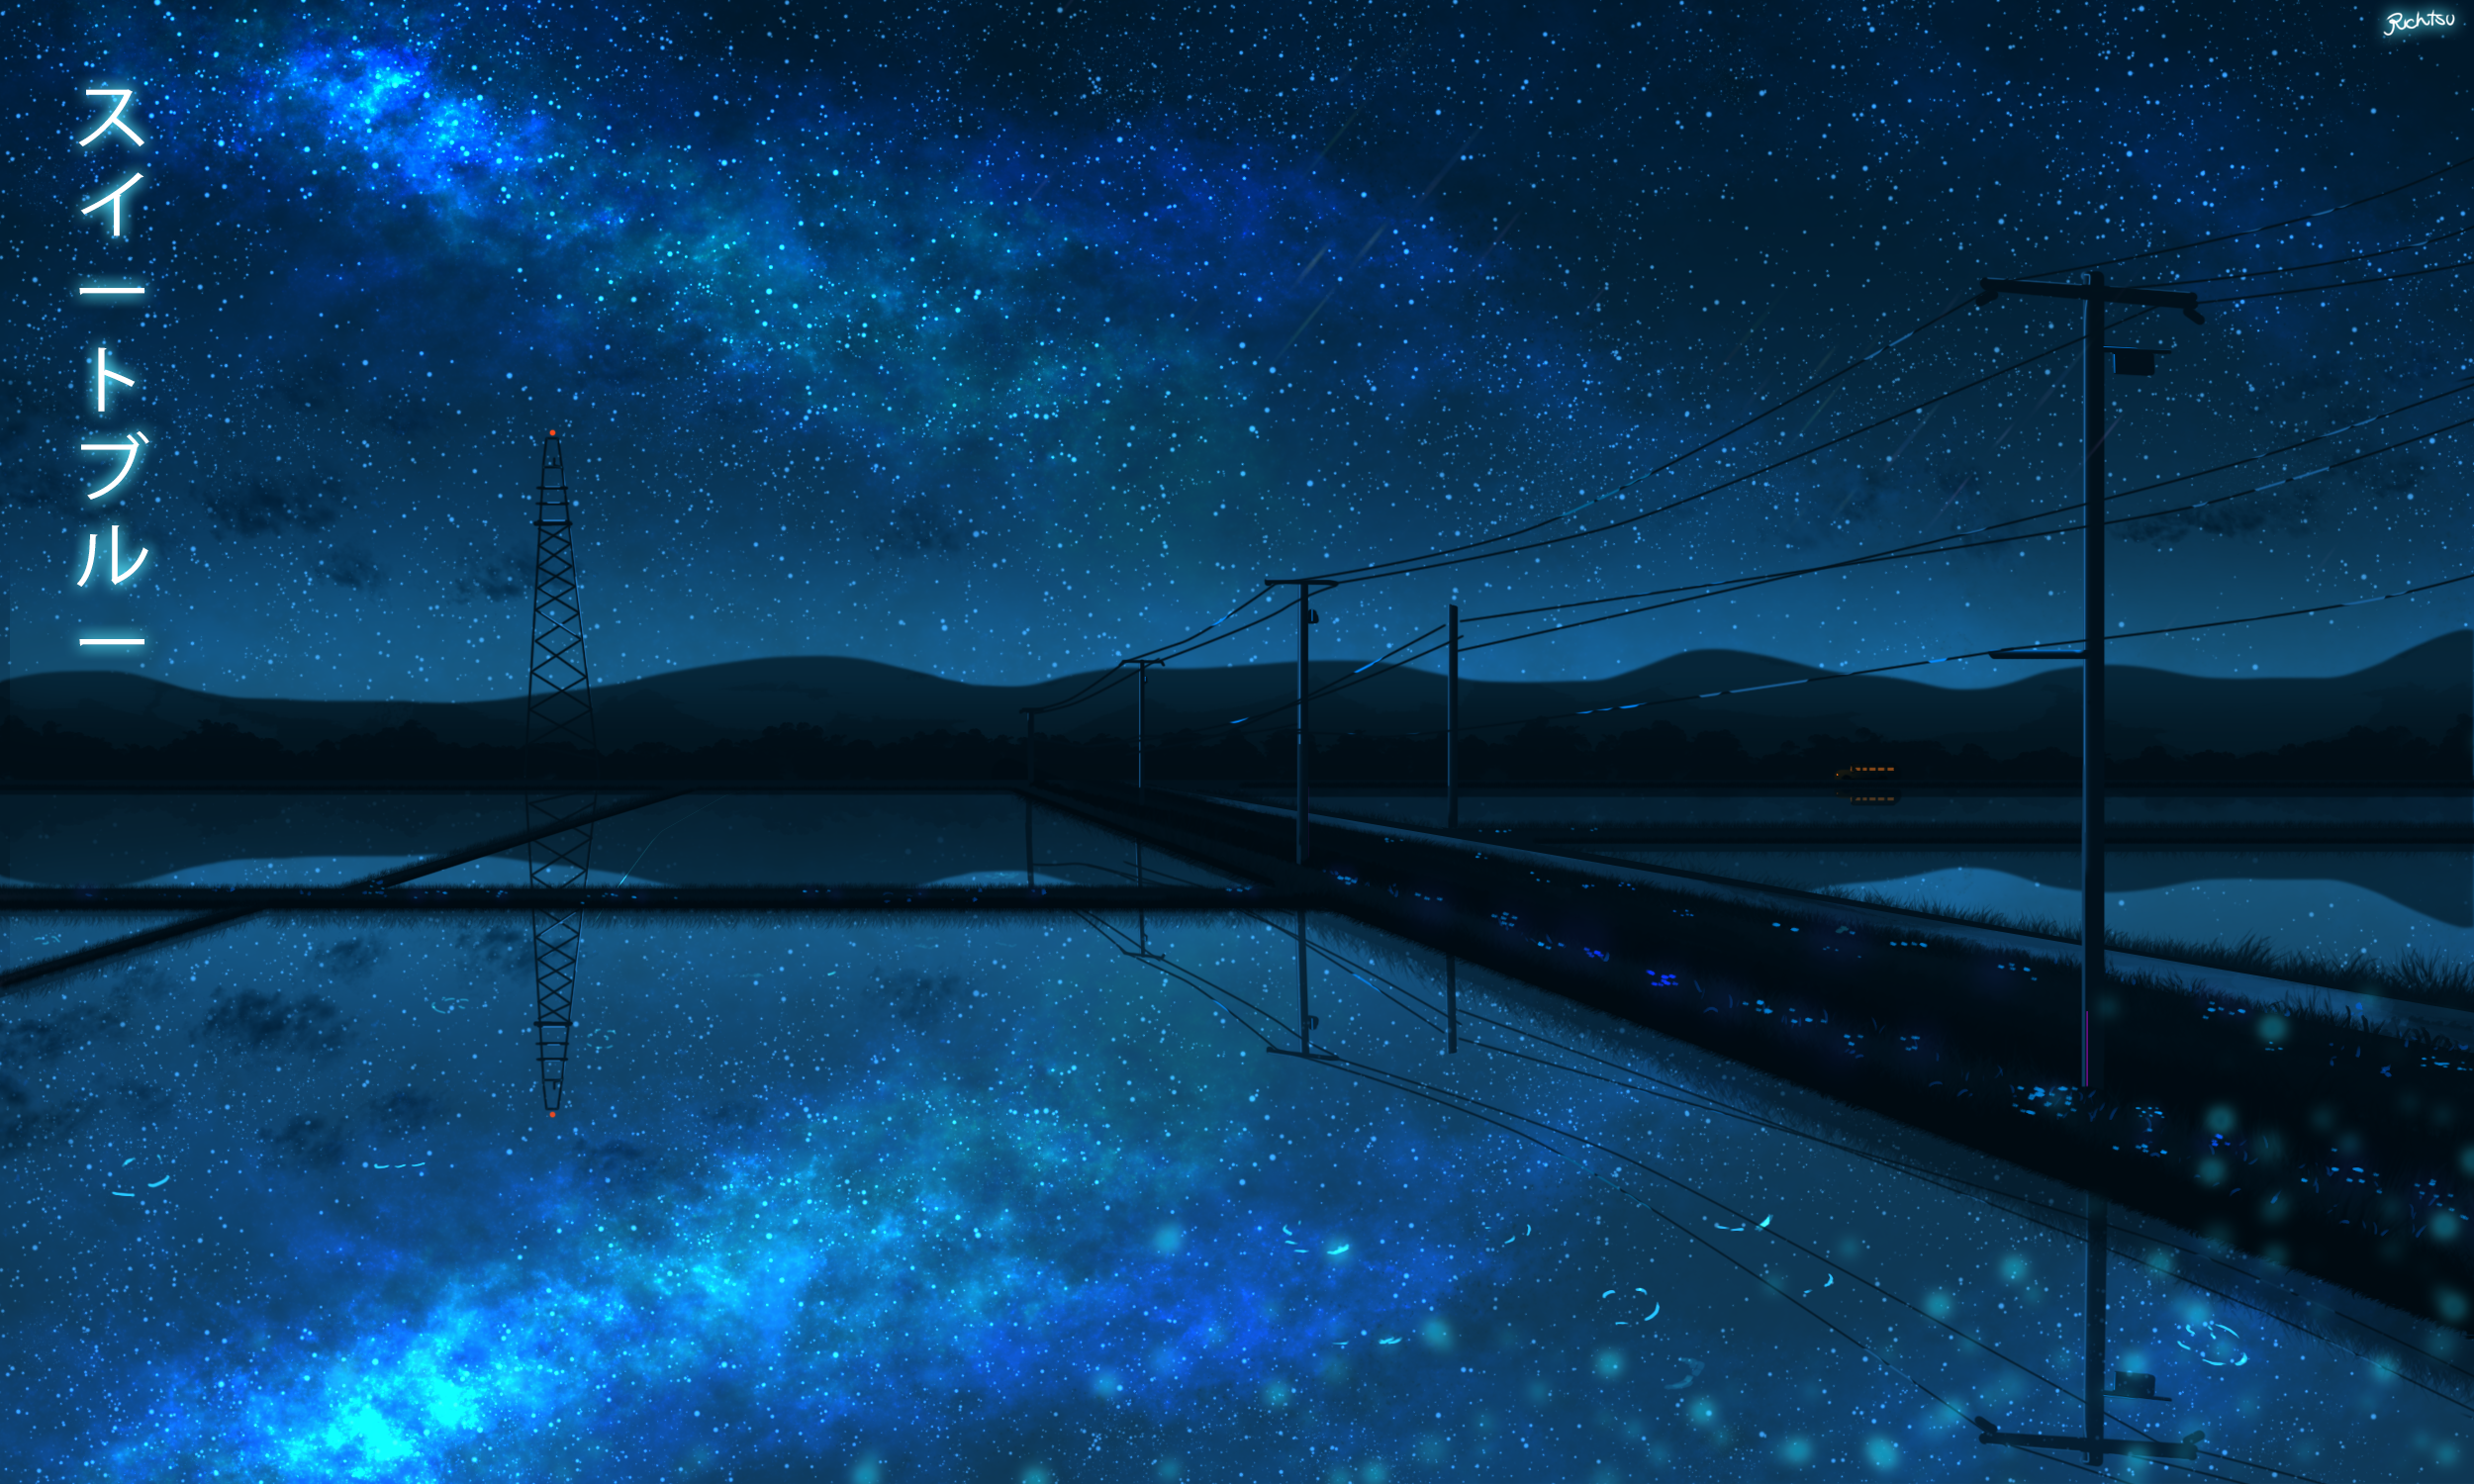 Anime 2500x1500 Richtsu digital art sky stars power lines reflection night dark water landscape